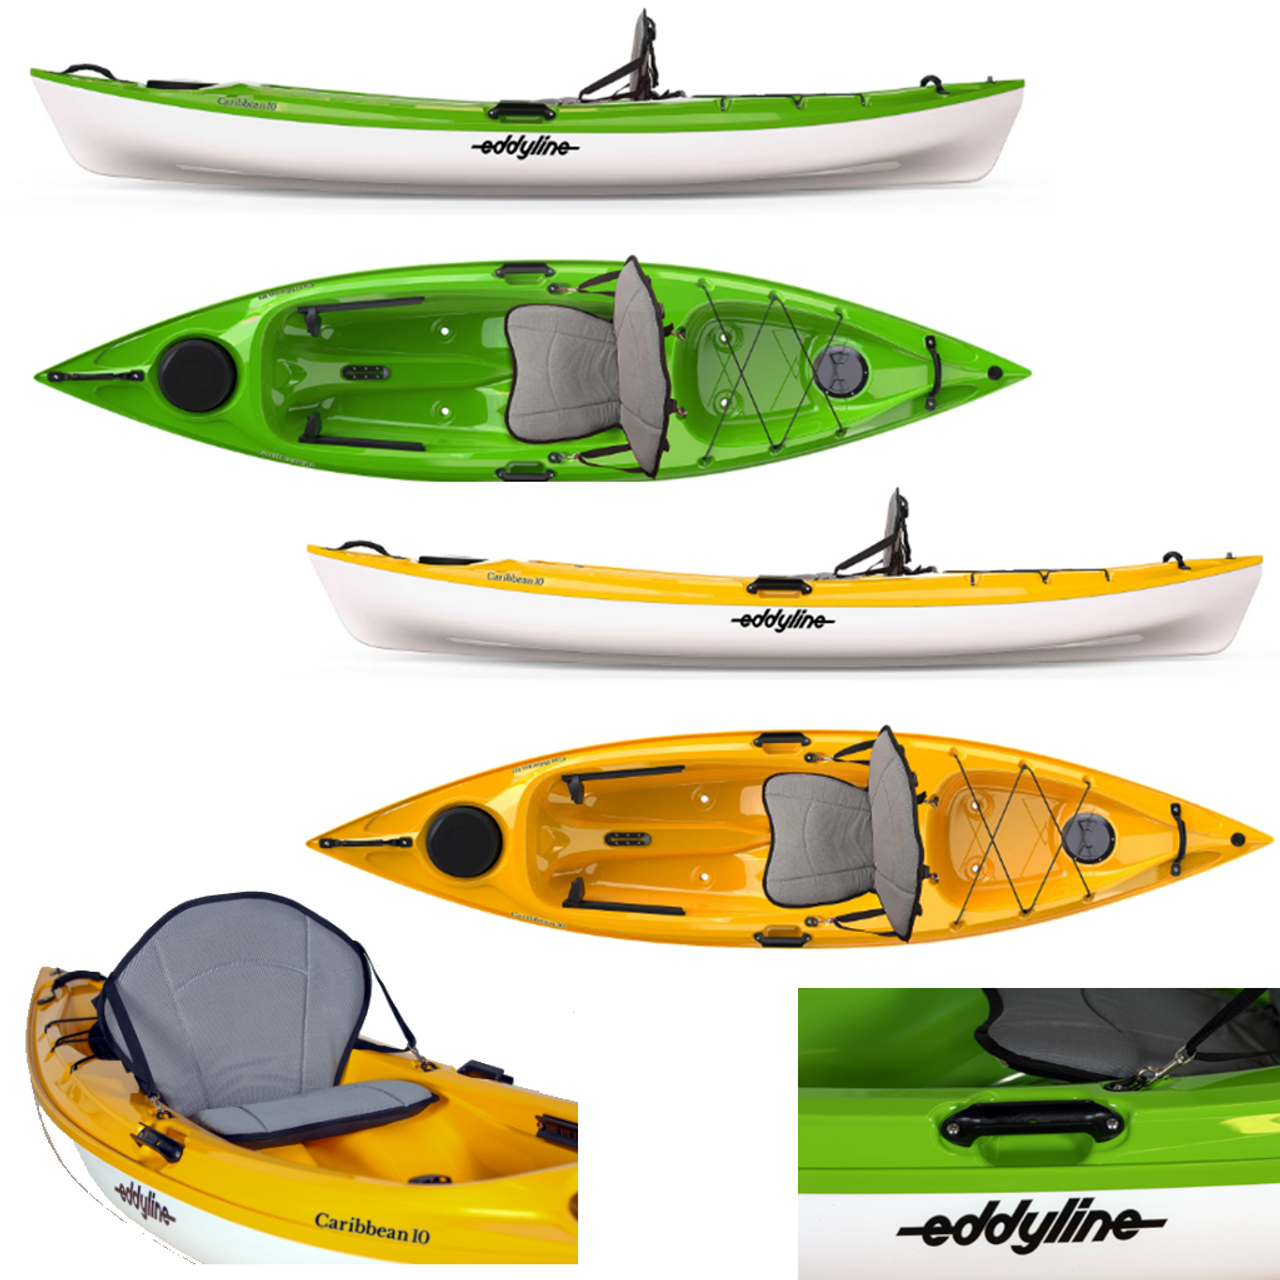 Eddyline Caribbean 10 - Sit On Top Kayak Lime